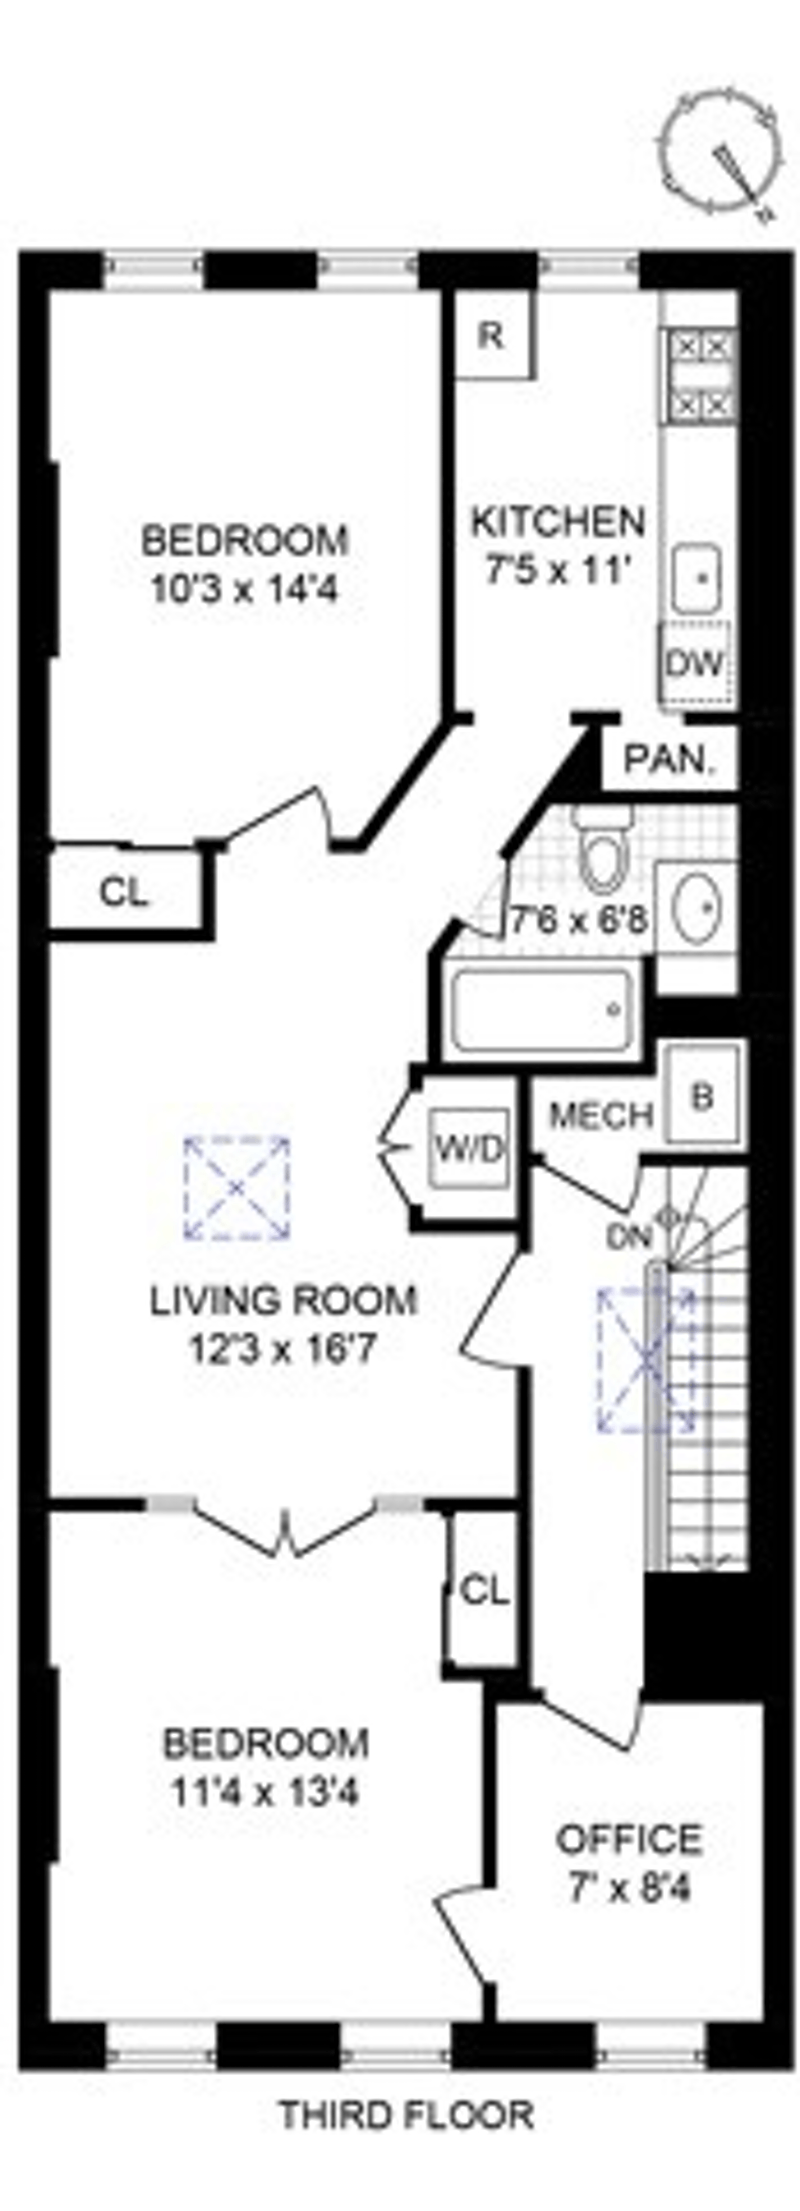 Floorplan for 143 16th Street, 3